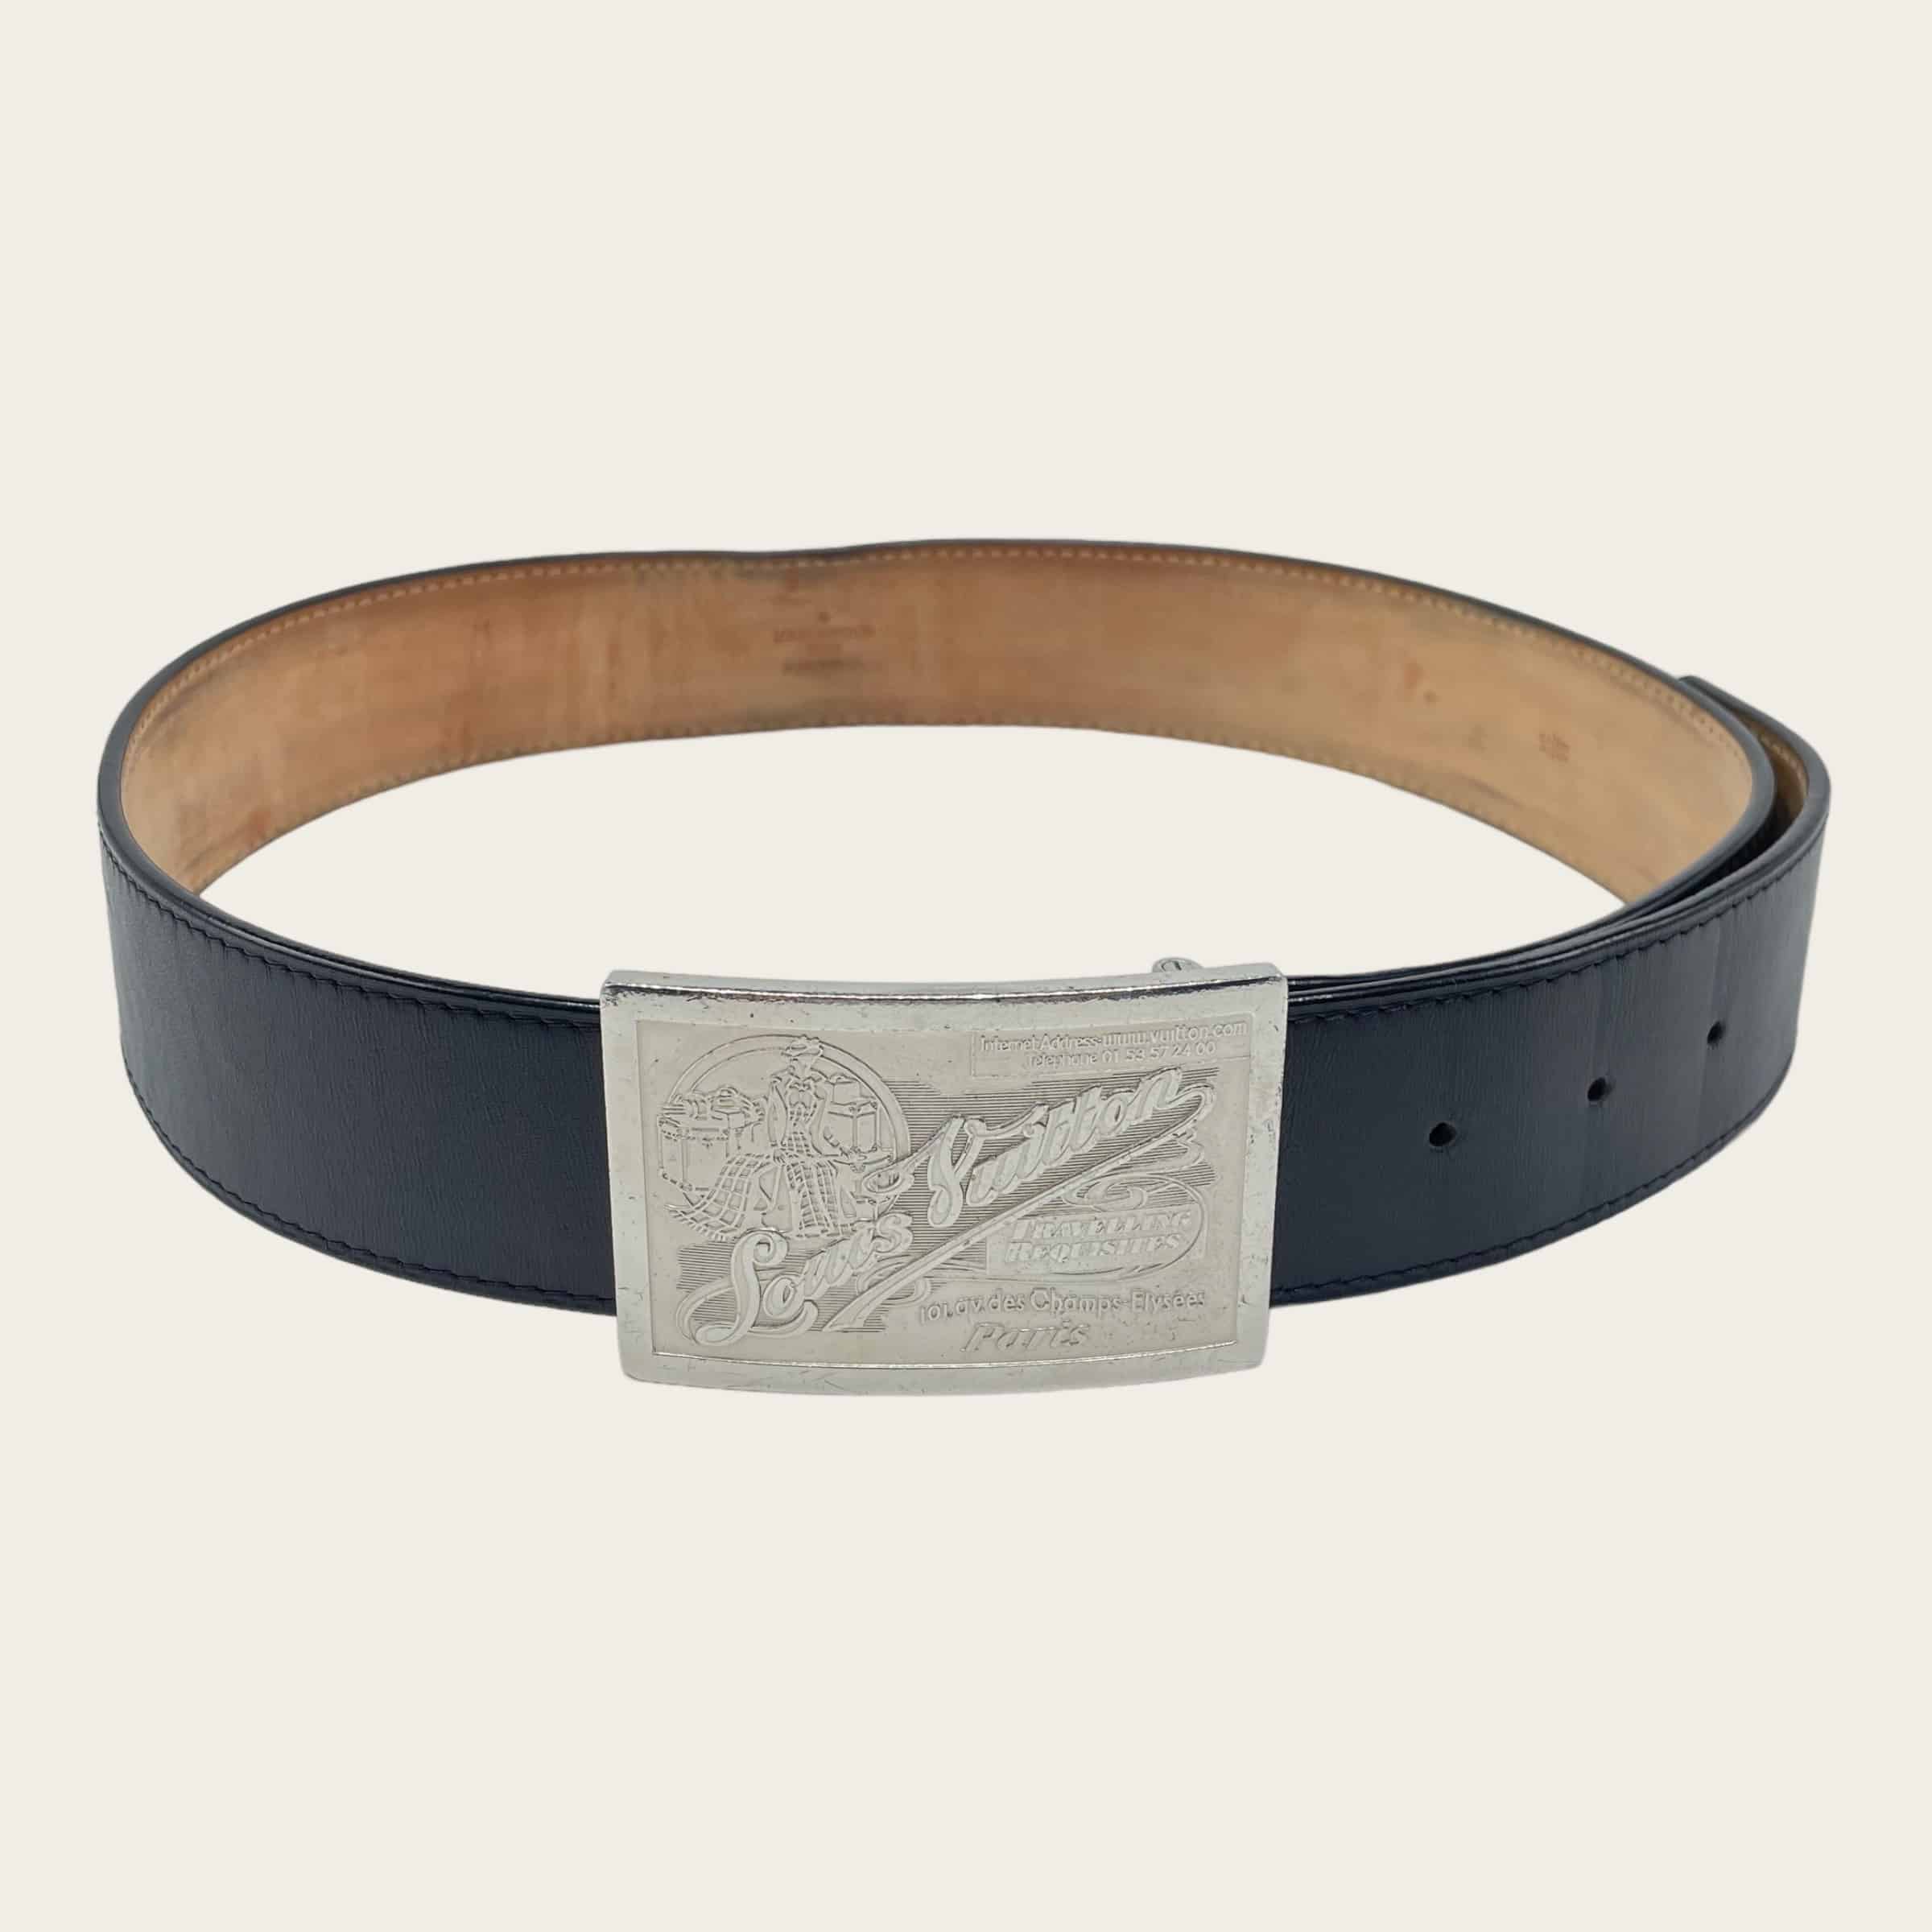 Louis Vuitton cintura in pelle nera placca logo argento, 85. - La Belle  Epoque